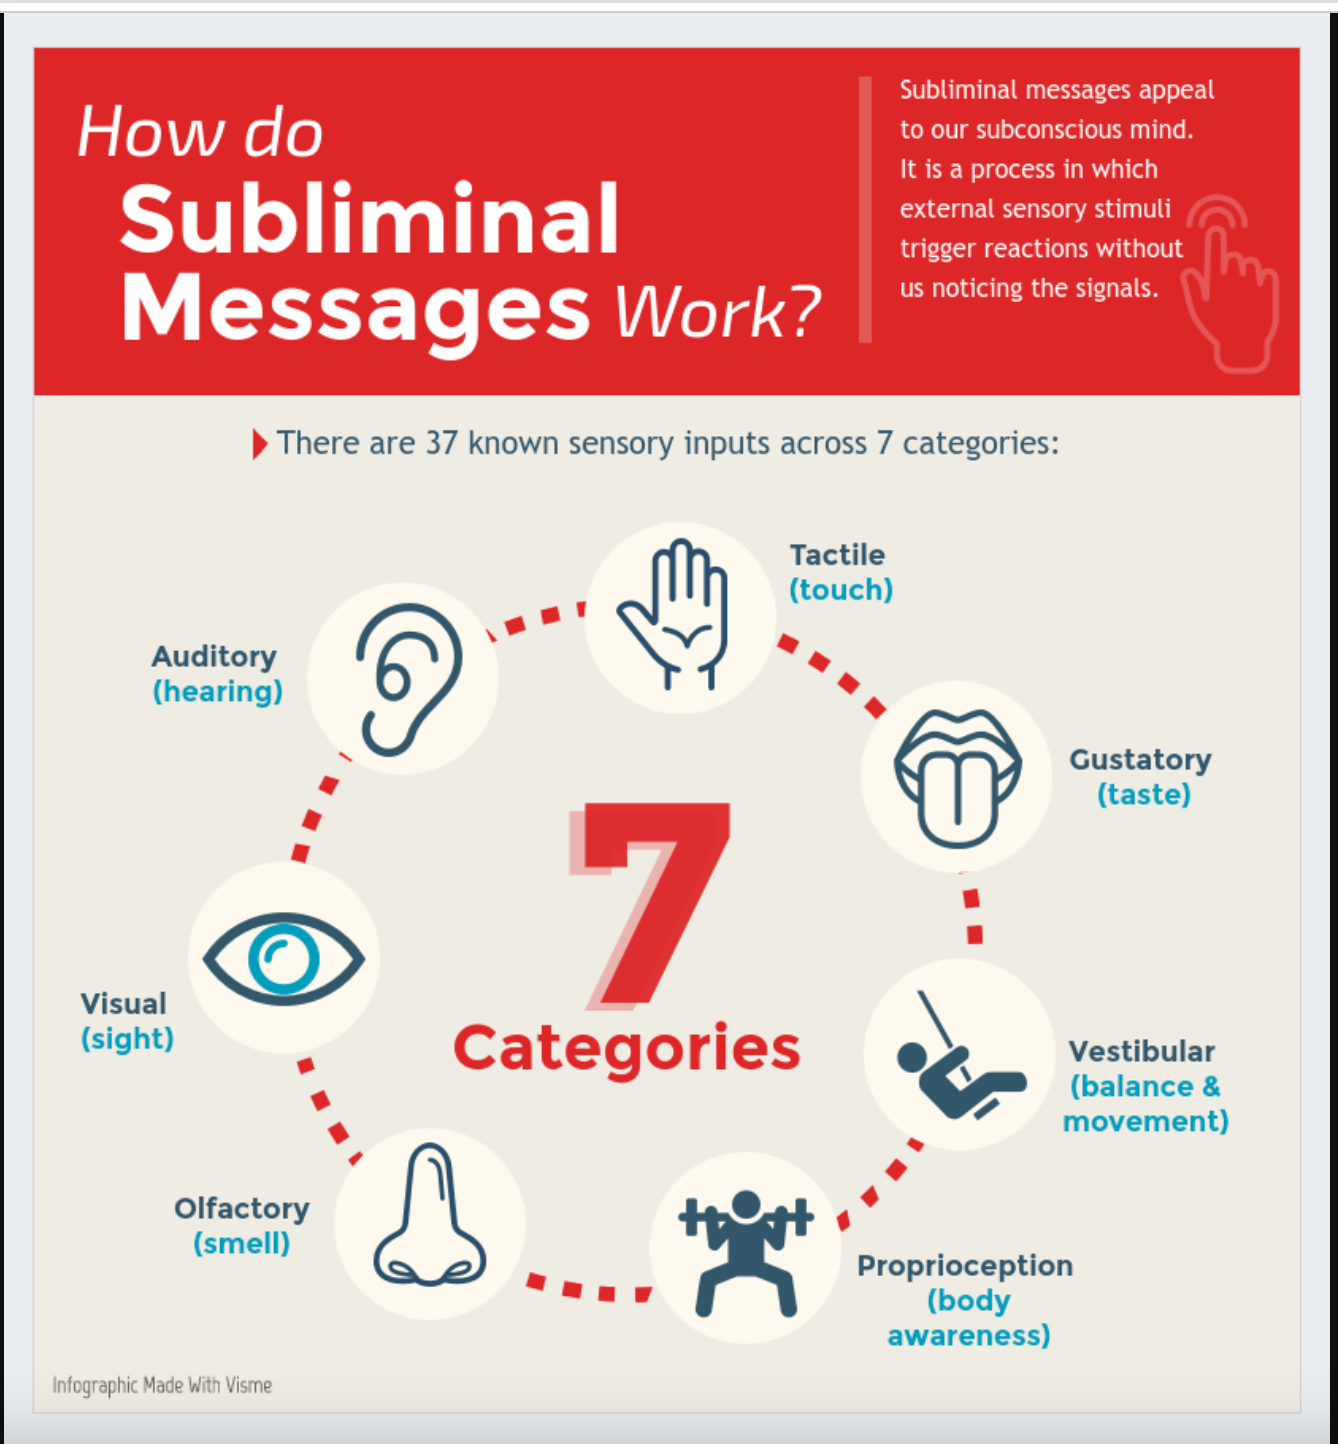 An Infographic describing 7 categories of subliminal messages.